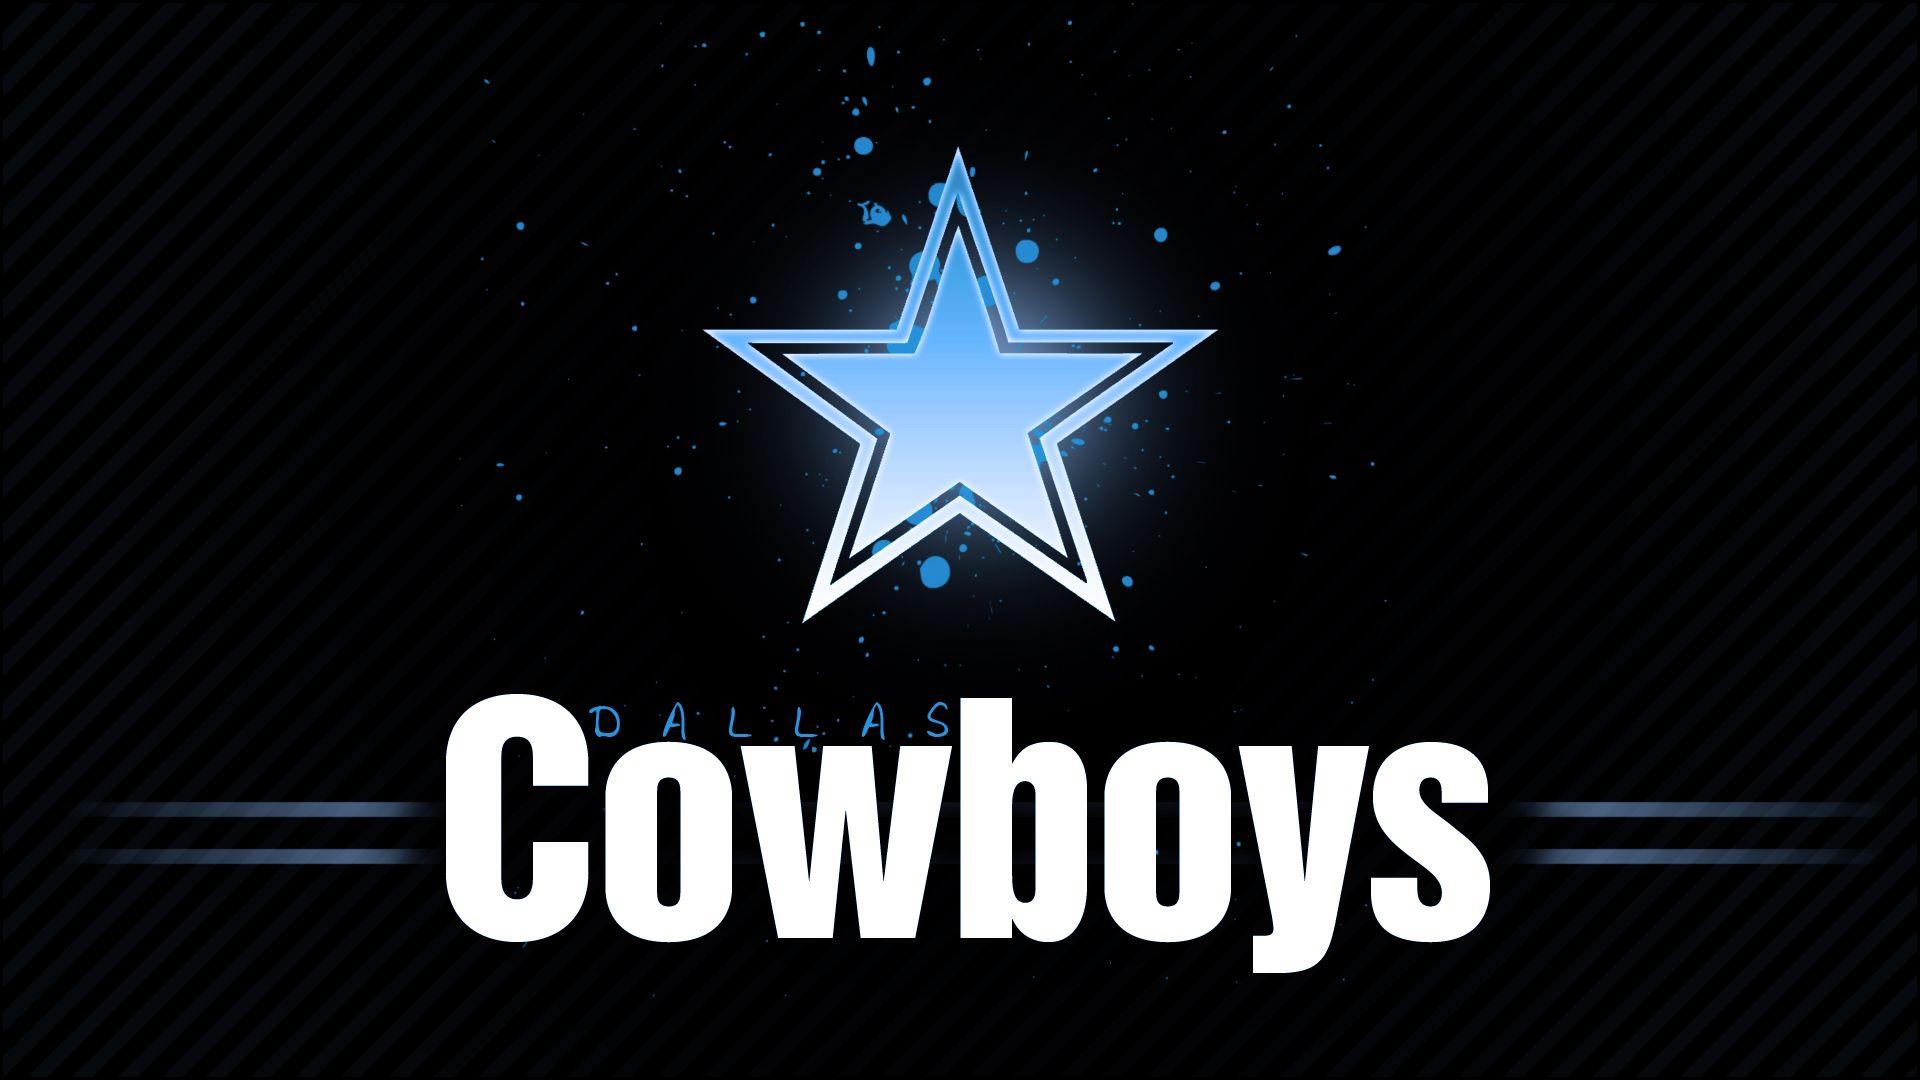 Cowboys Wallpapers - Top Free Cowboys